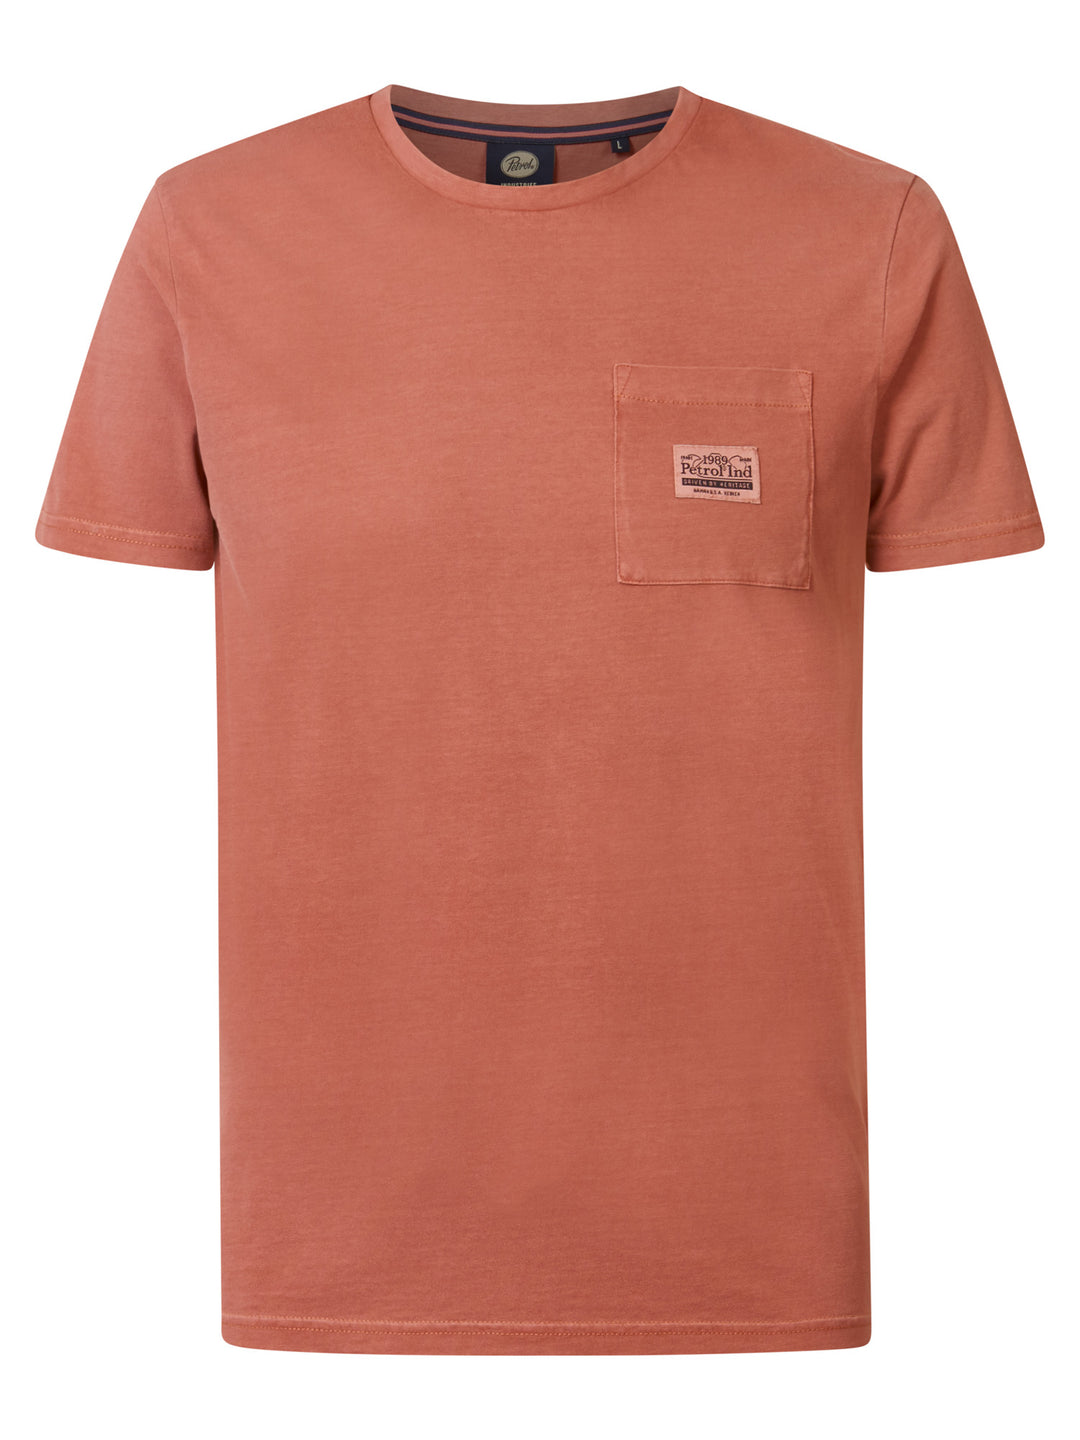 Petrol - Heren T-Shirt - M-1040-TSR639 - 3166 Red Brick